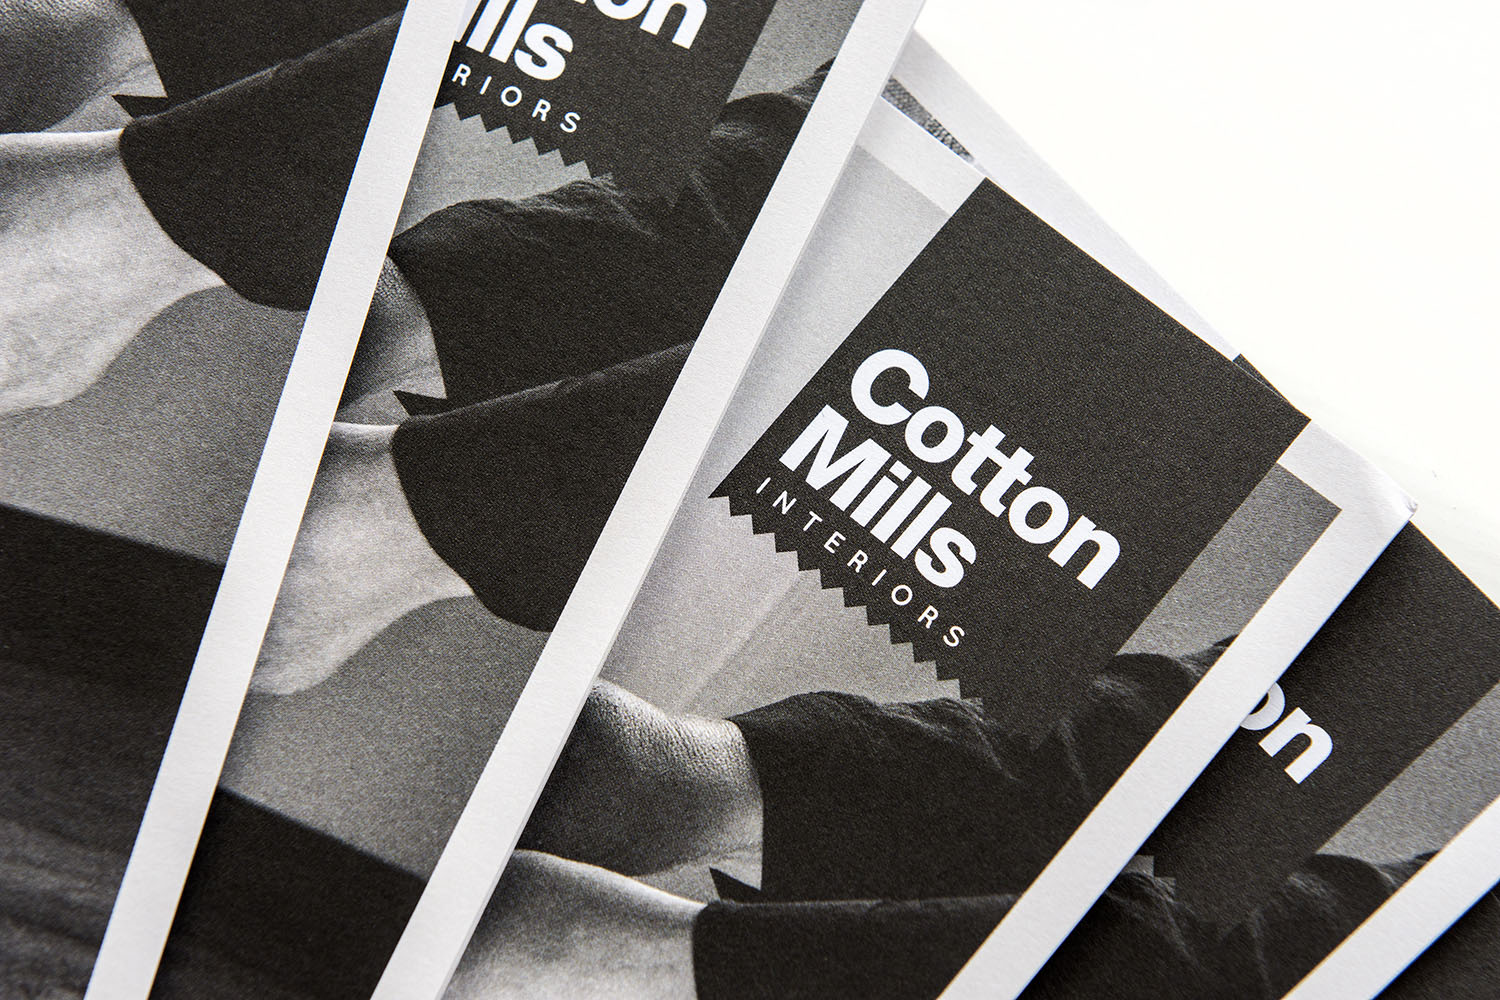 Cotton Mills